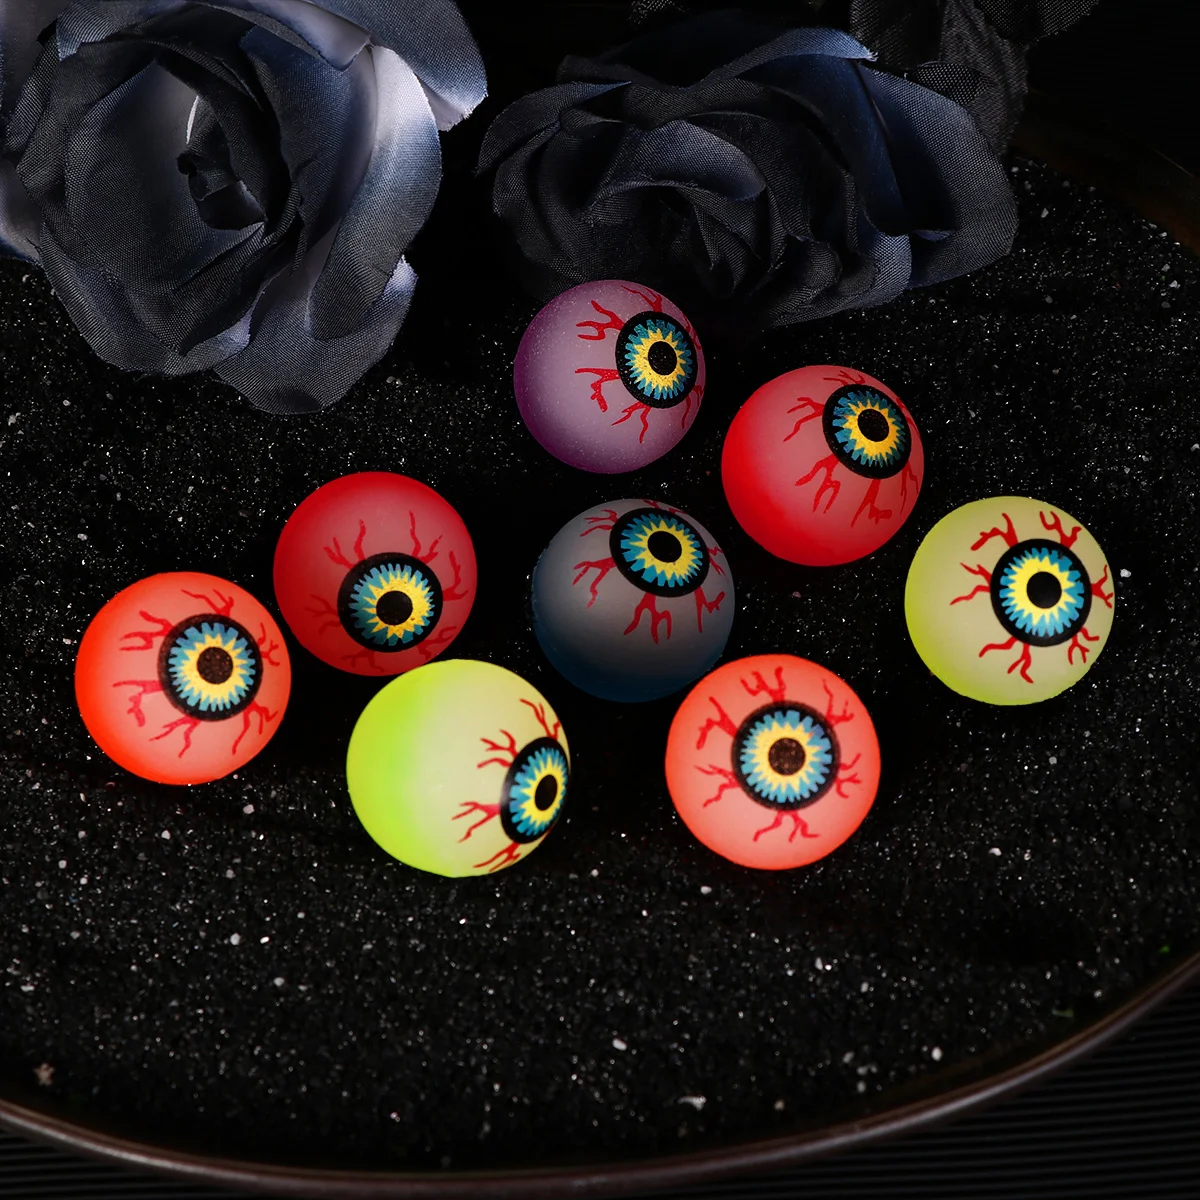 

Halloween Glowing Eyeballs Funny Bouncy Eyeballs Scary Eye Balls Toys Halloween Glowing Party Props 32mm (Random Color)